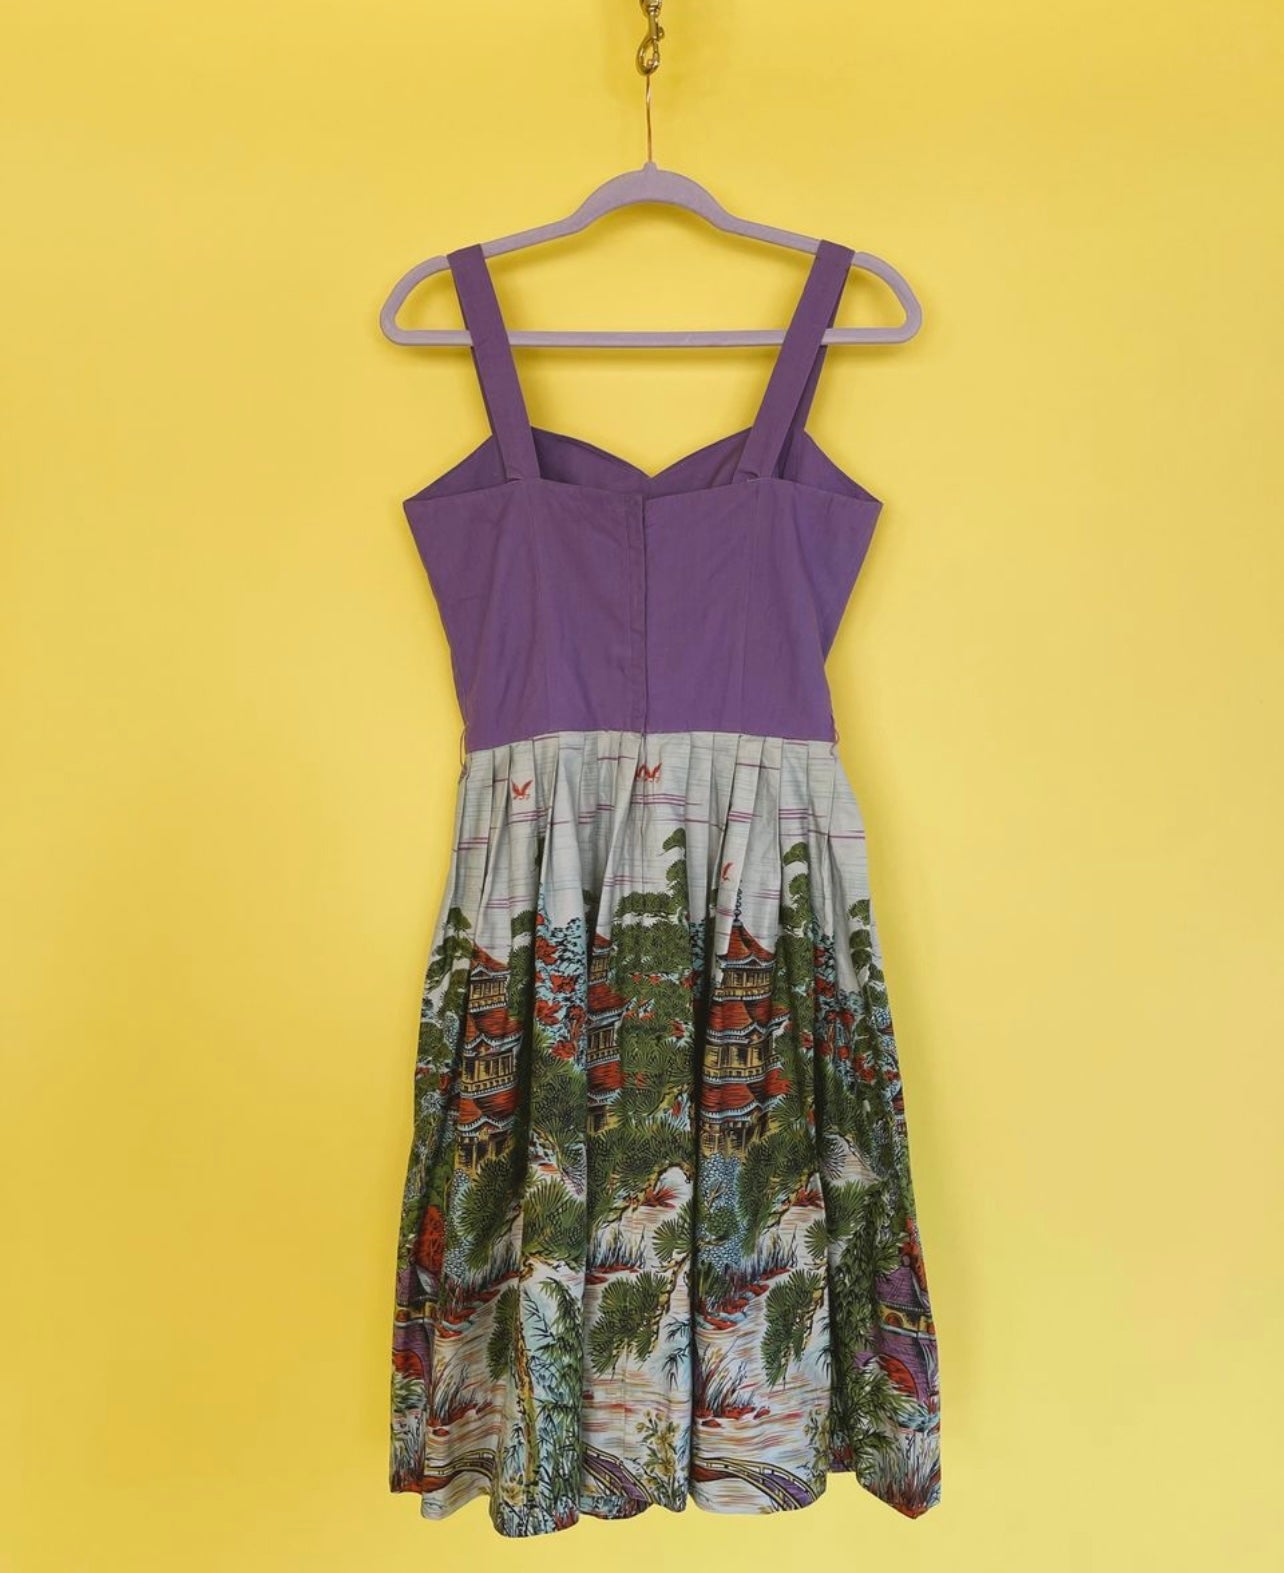 This Vintage #50s / #60s Novelty Print A-line Cotton Dress fits sizes XS-SM